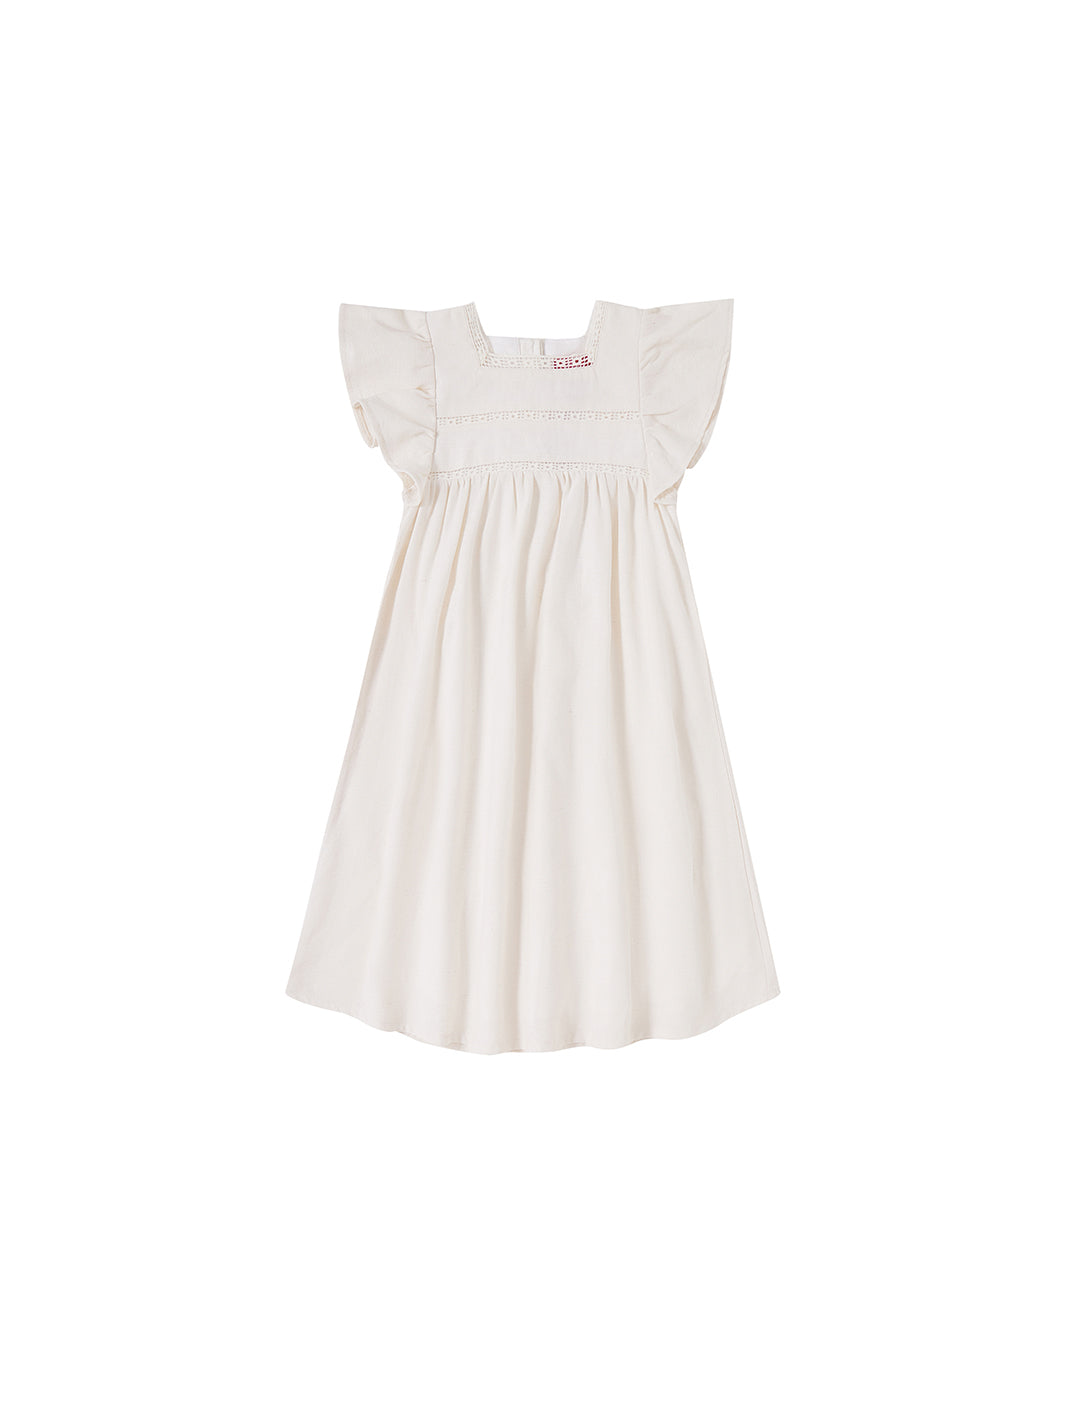 Lace Dress - White